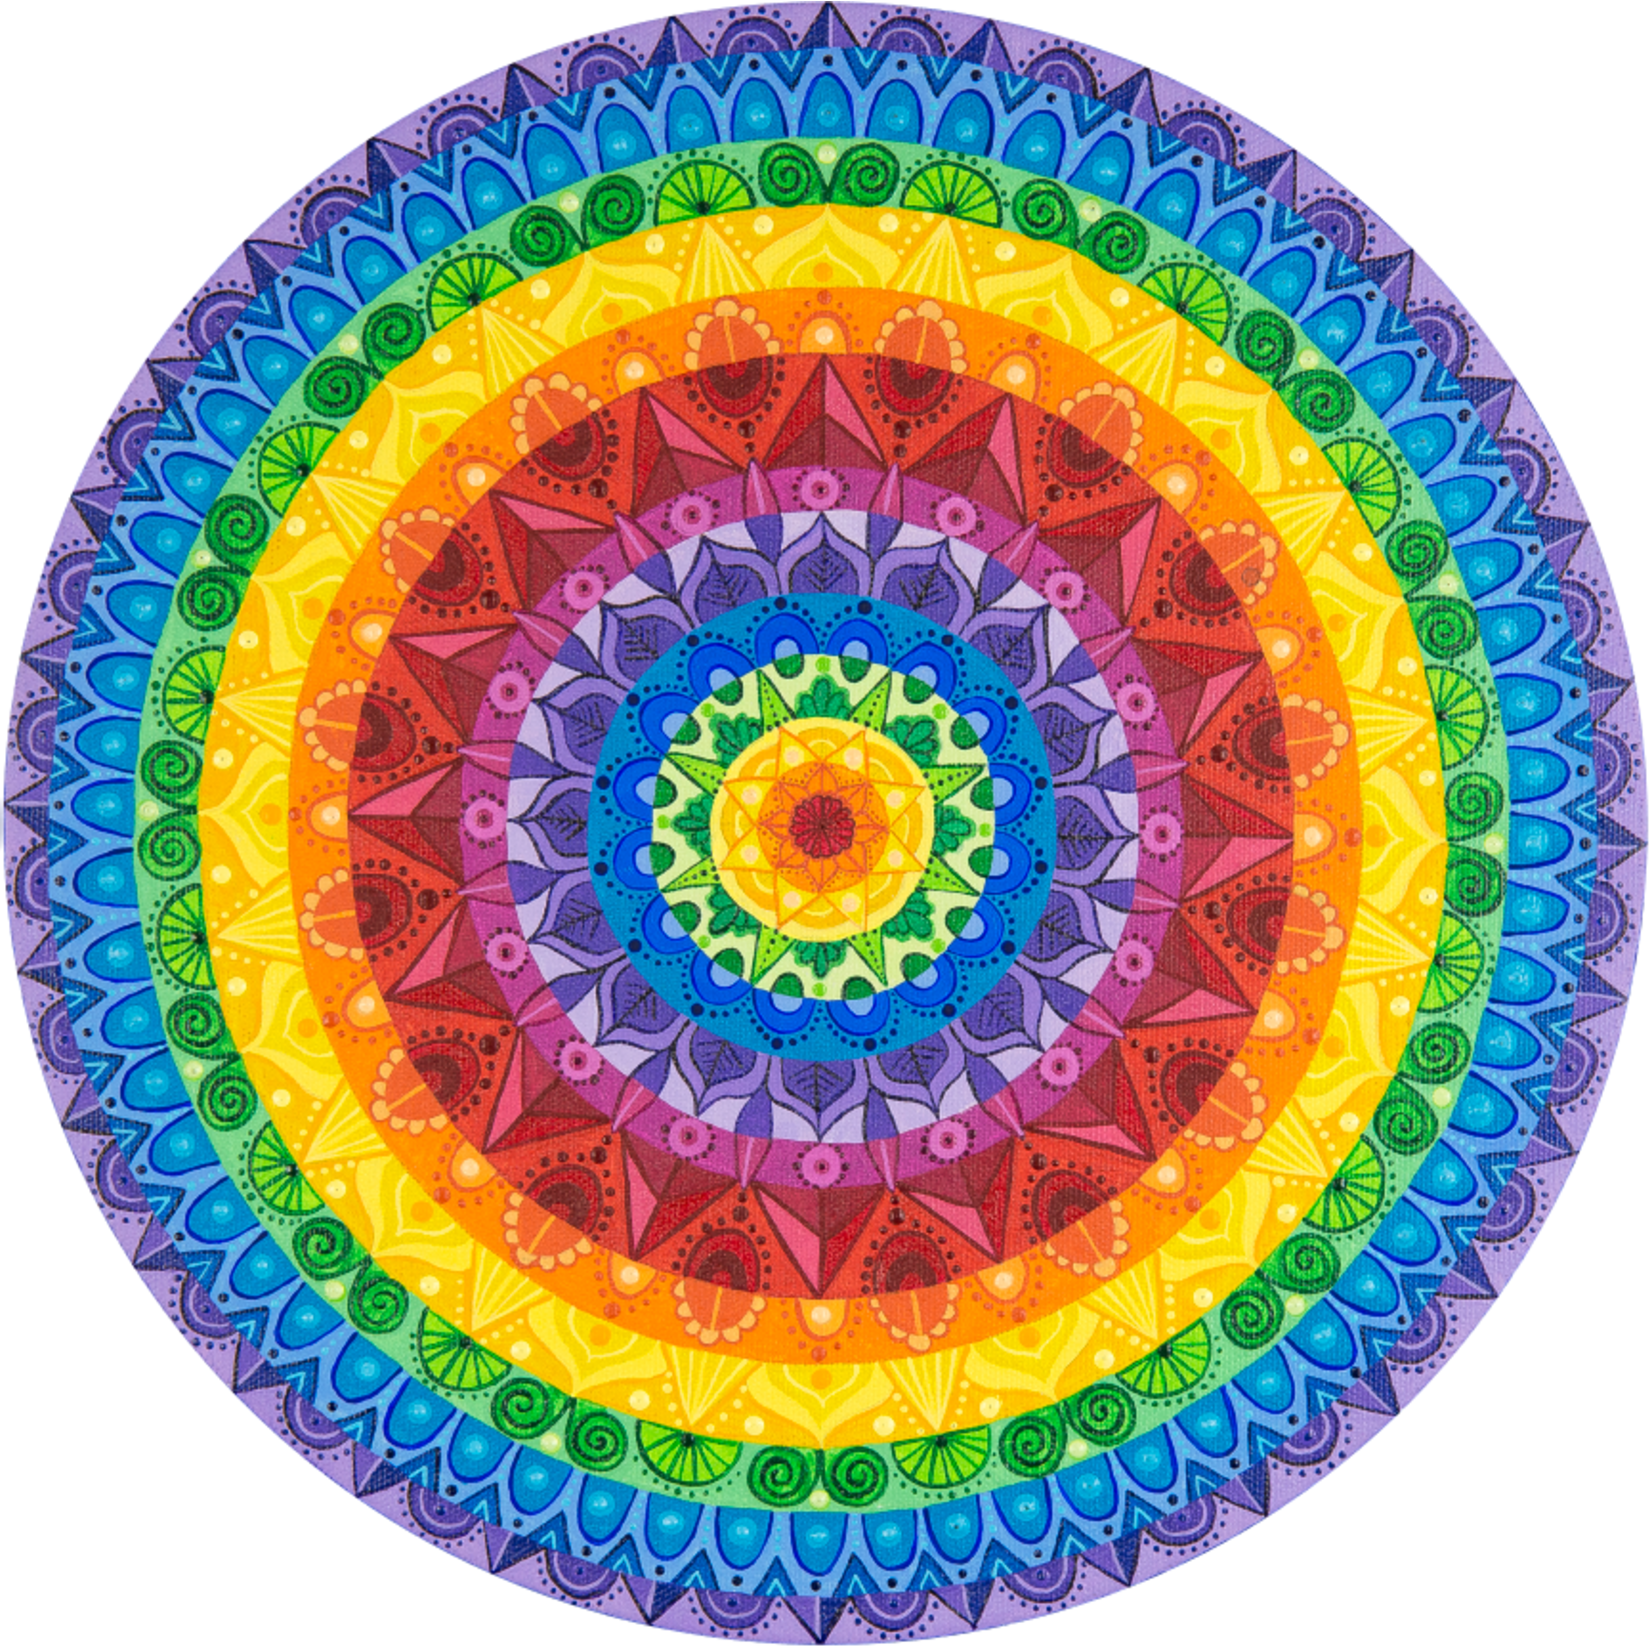 Stirling Studios "Rainbow Round" Mandala canvas print